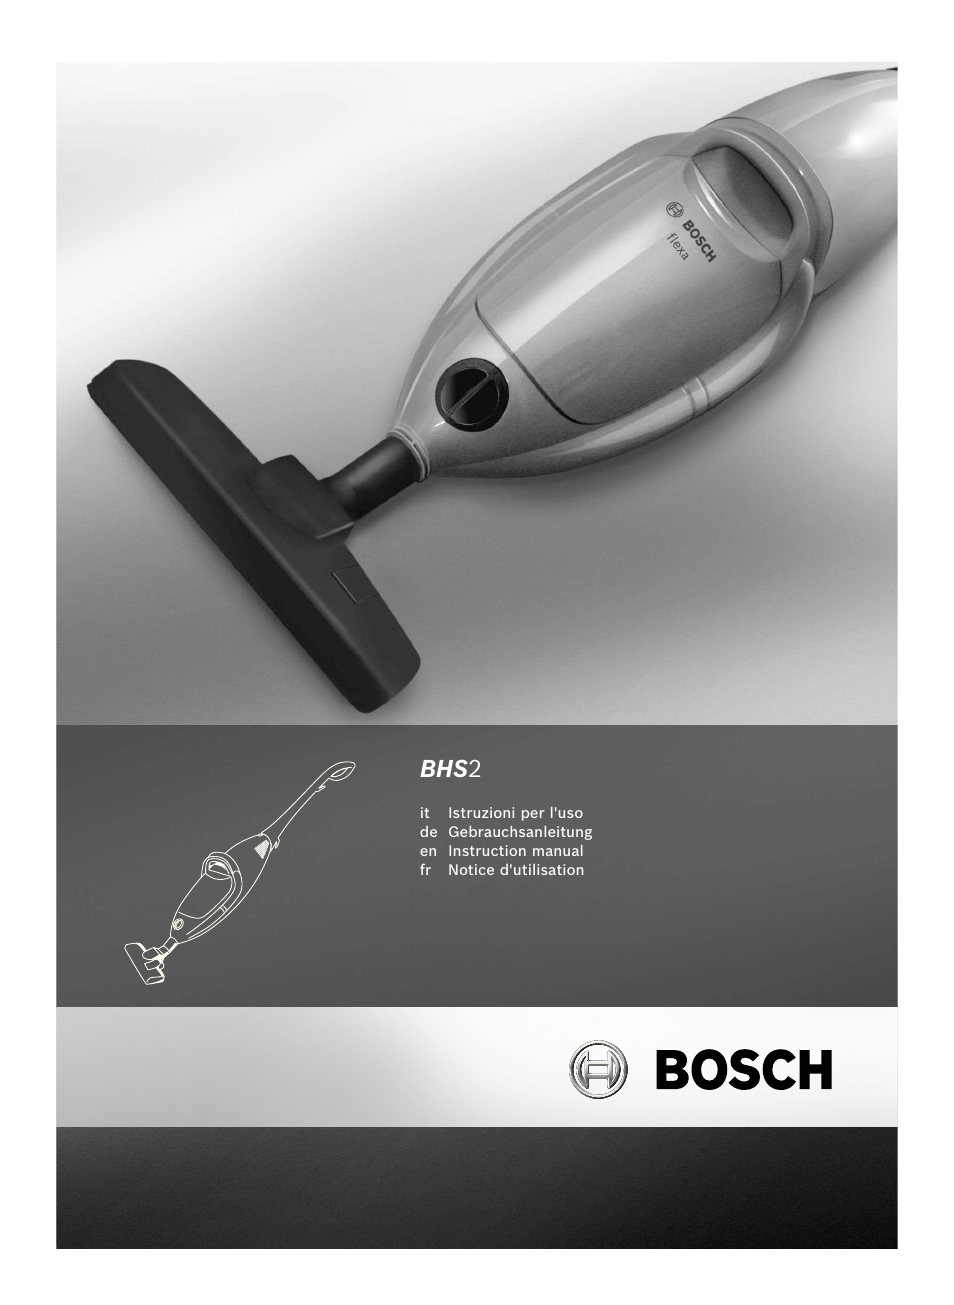 Bosch flexa Handstaubsauger BHS21600 nordkapblau-metallic User Manual | 35  pages | Also for: Scopa elettrica a carrello BHS21600 flexa 1600 W